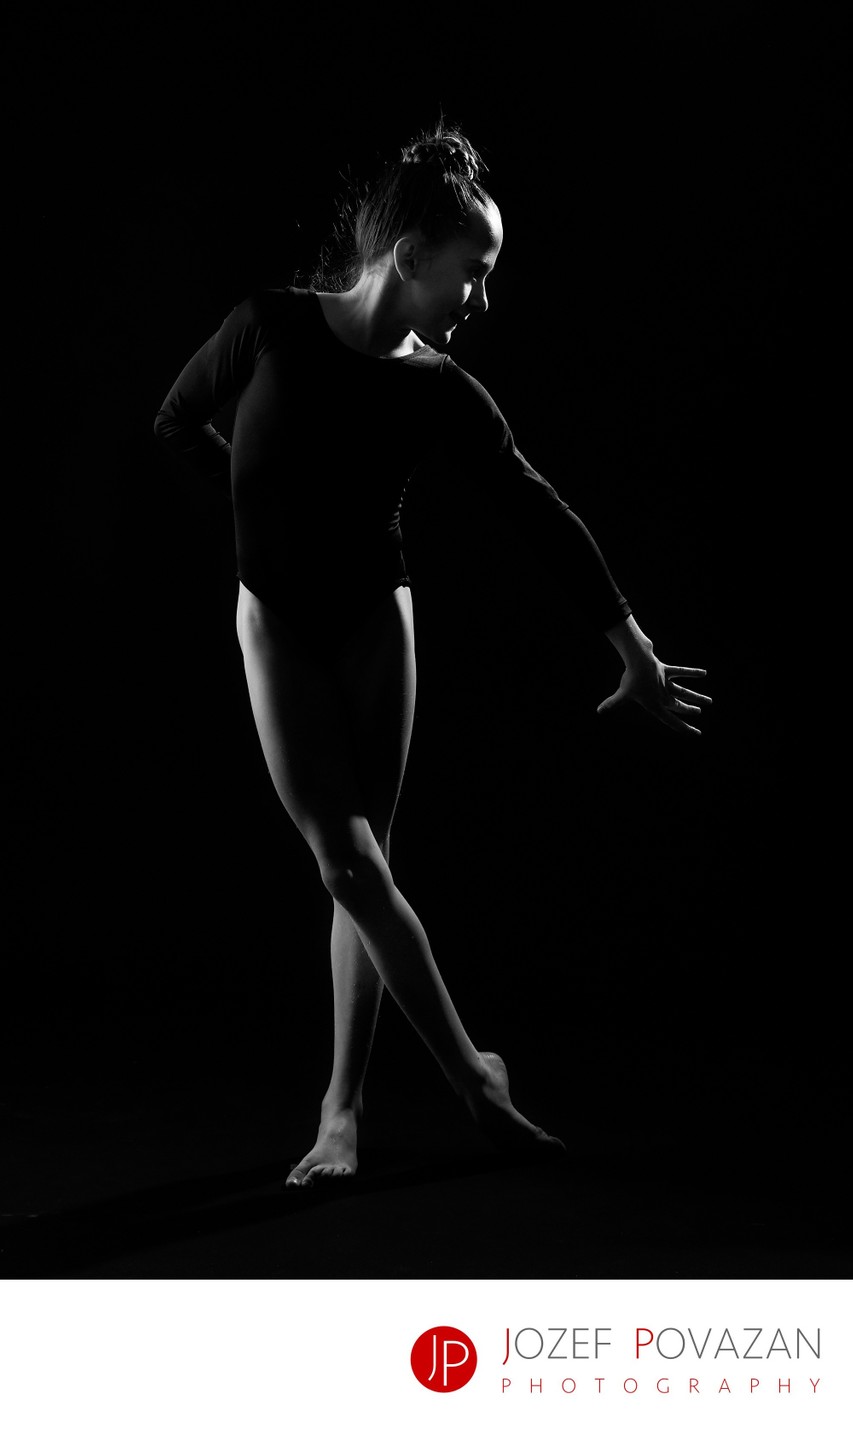 How to create modern - dramatic dancer studio portraits